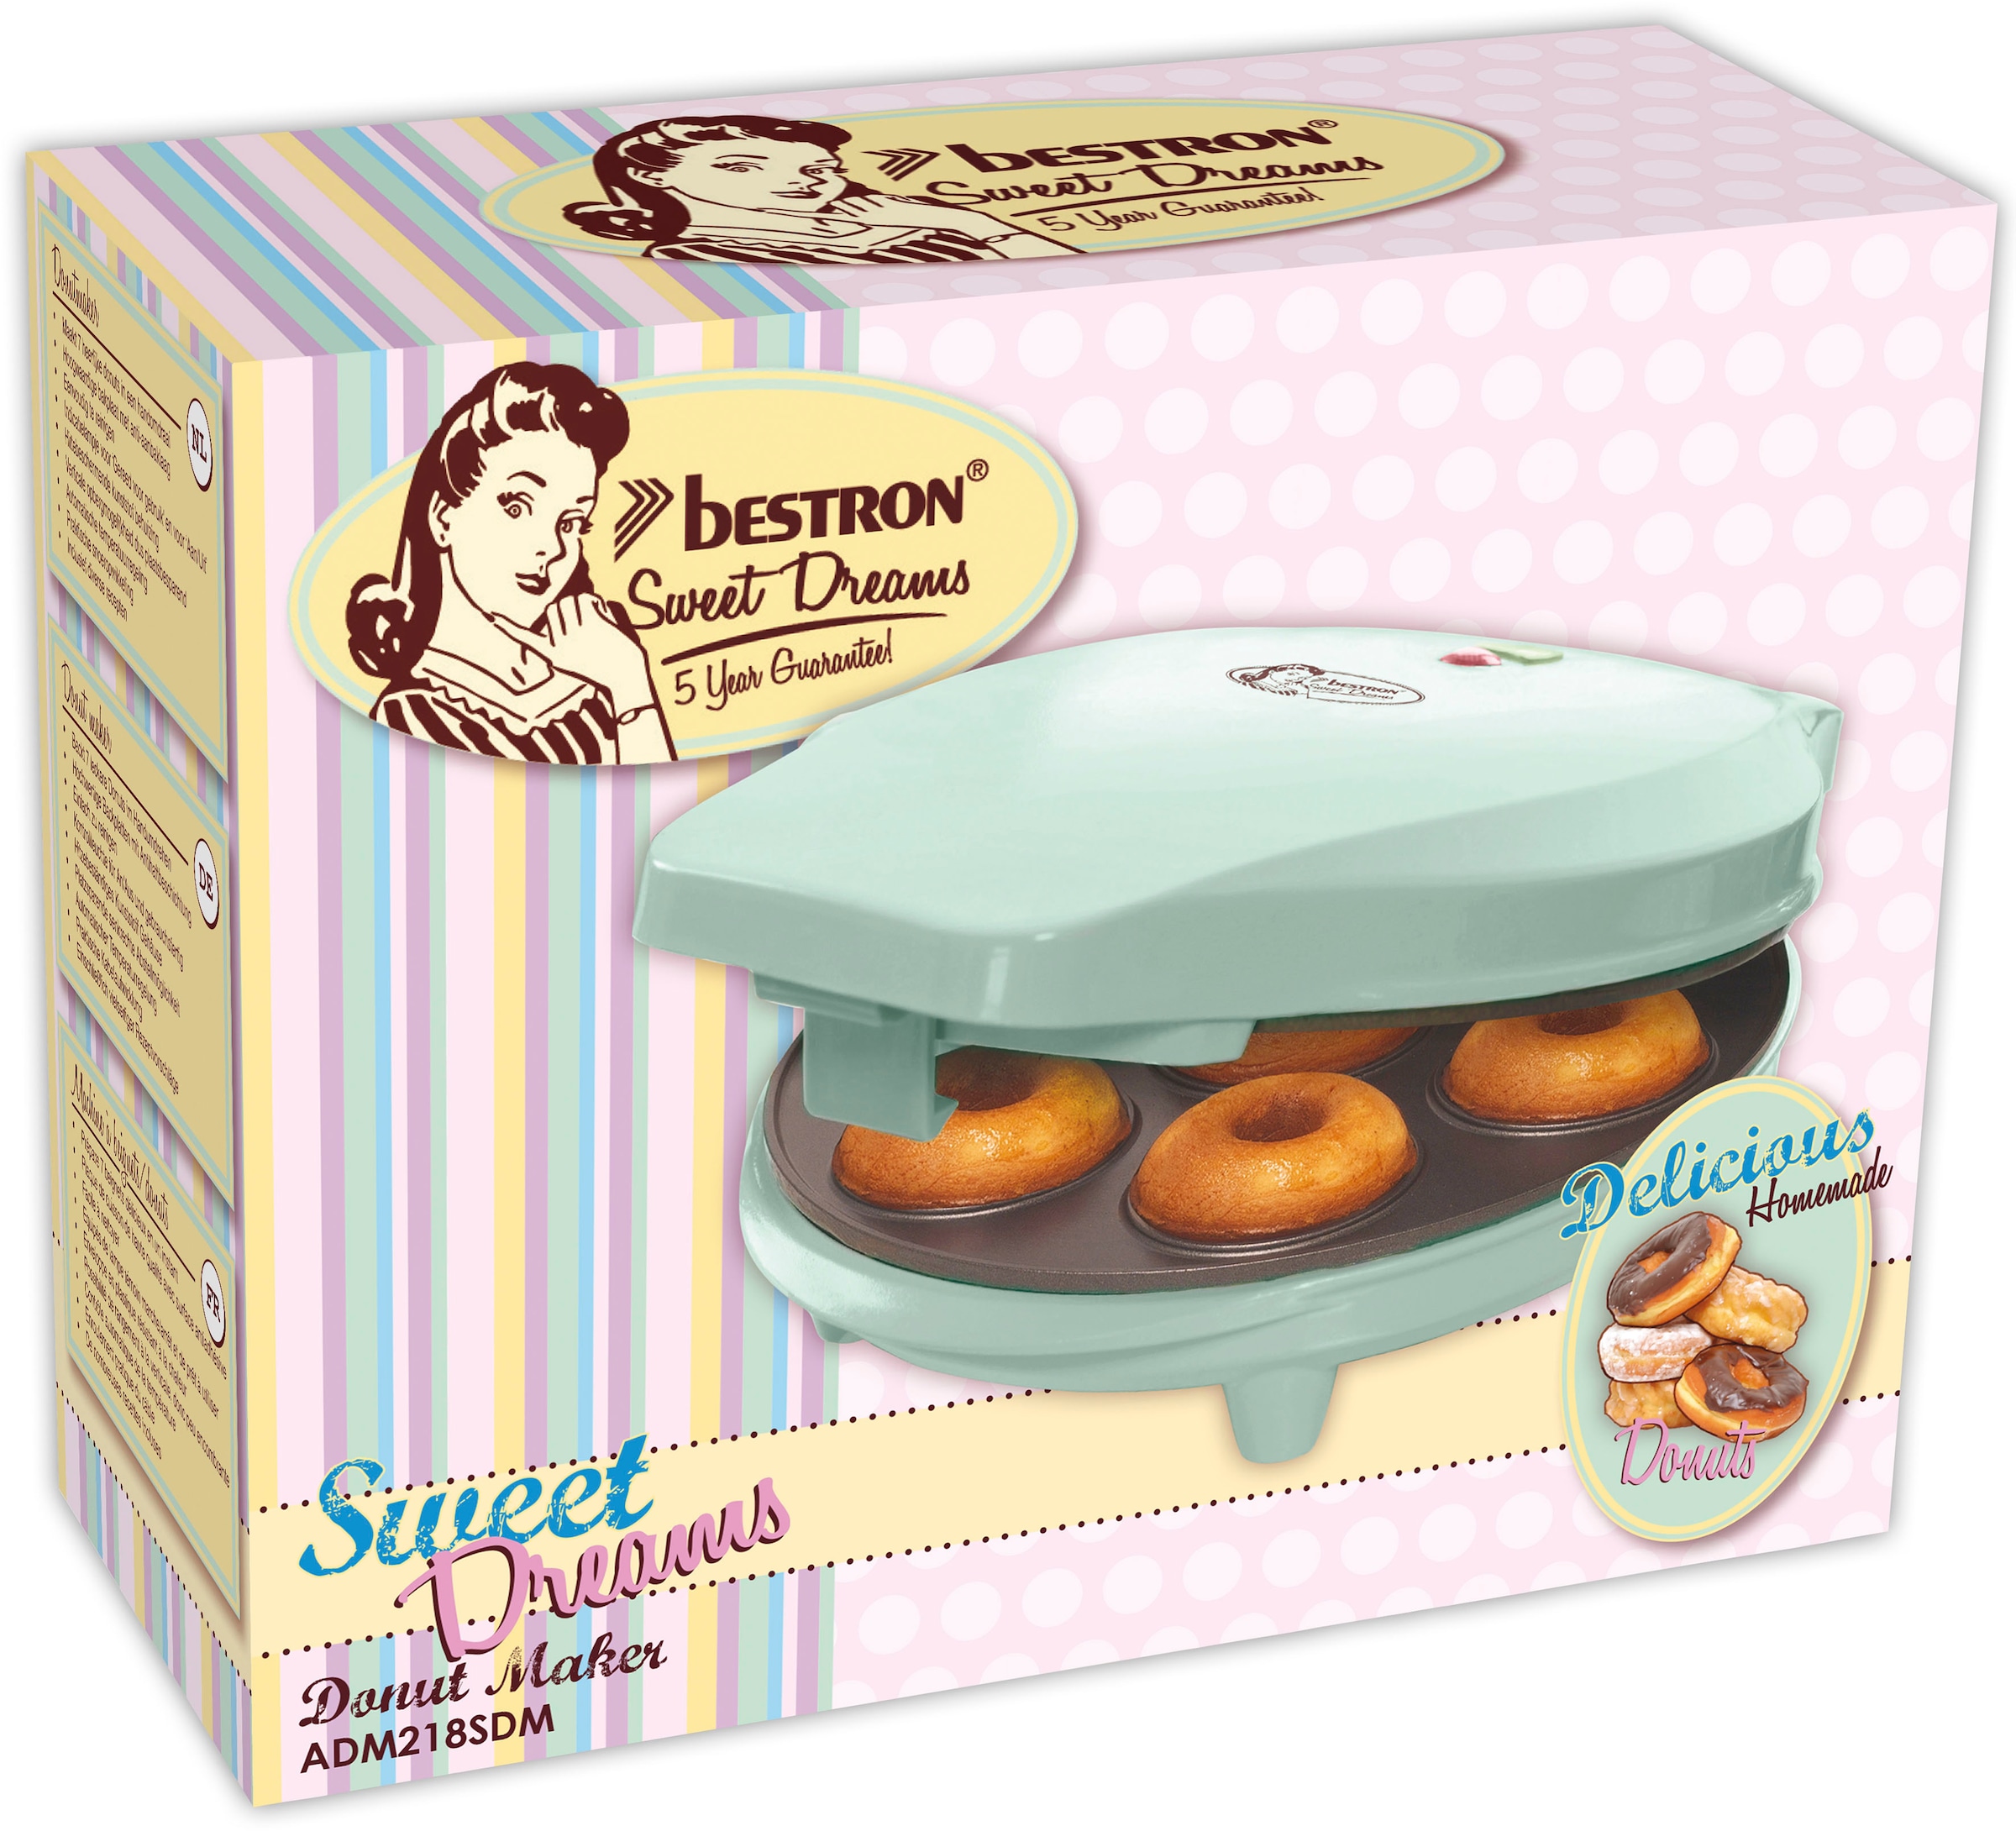 Farbe: Retro Sweet kaufen »ADM218SDM online W, Dreams«, Antihaftbeschichtung, bestron 700 Design, im Donut-Maker Mint